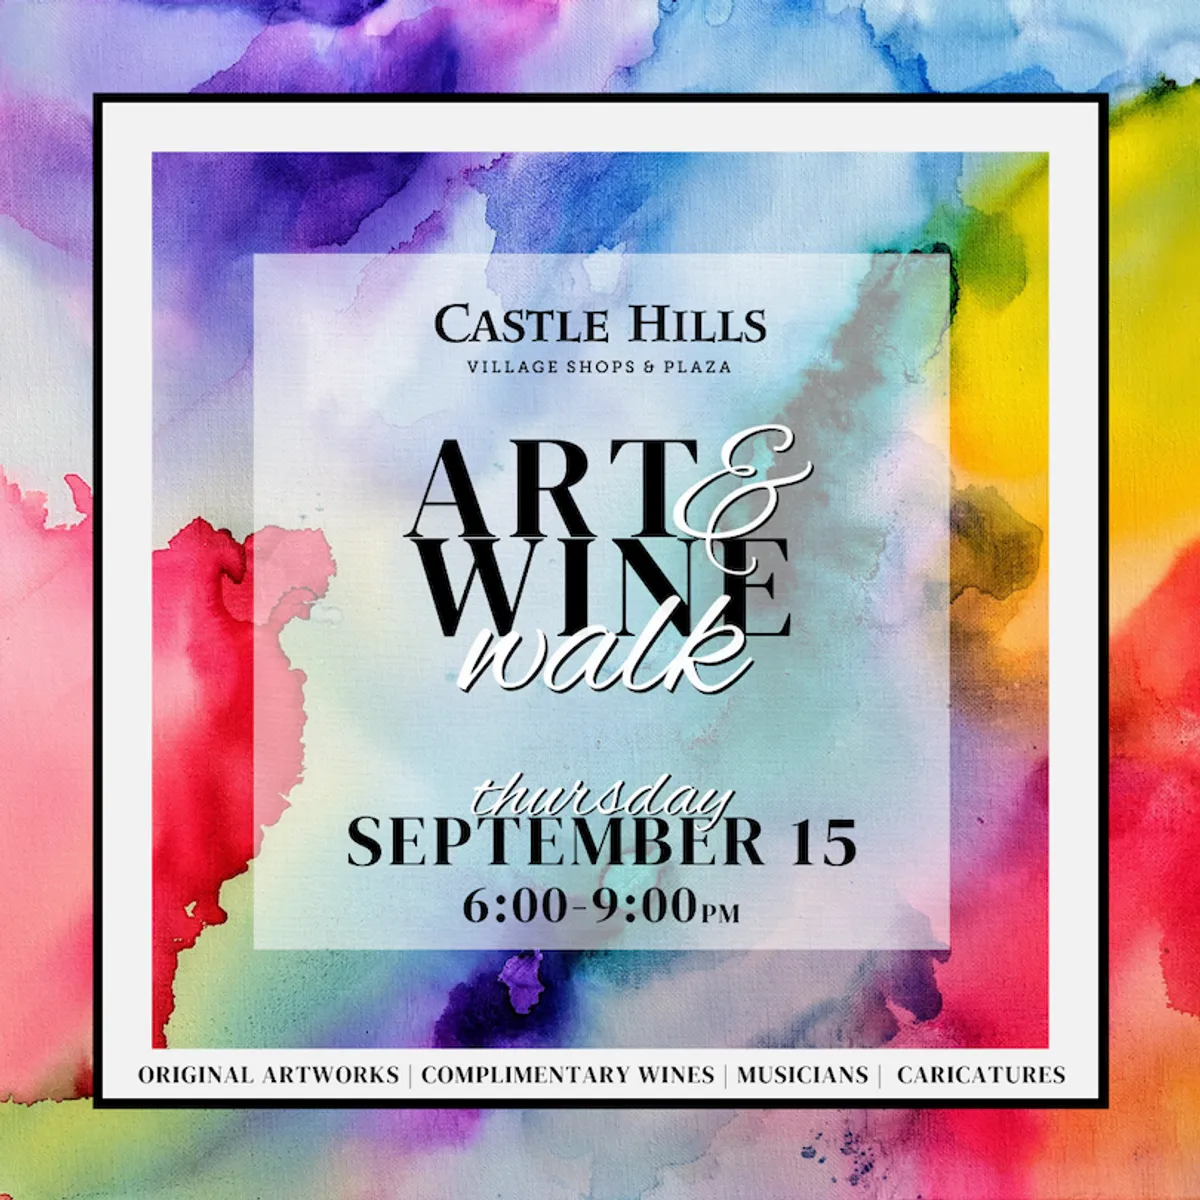 Annual Art & Wine Walk returns to American Legend’s Castle Hills community